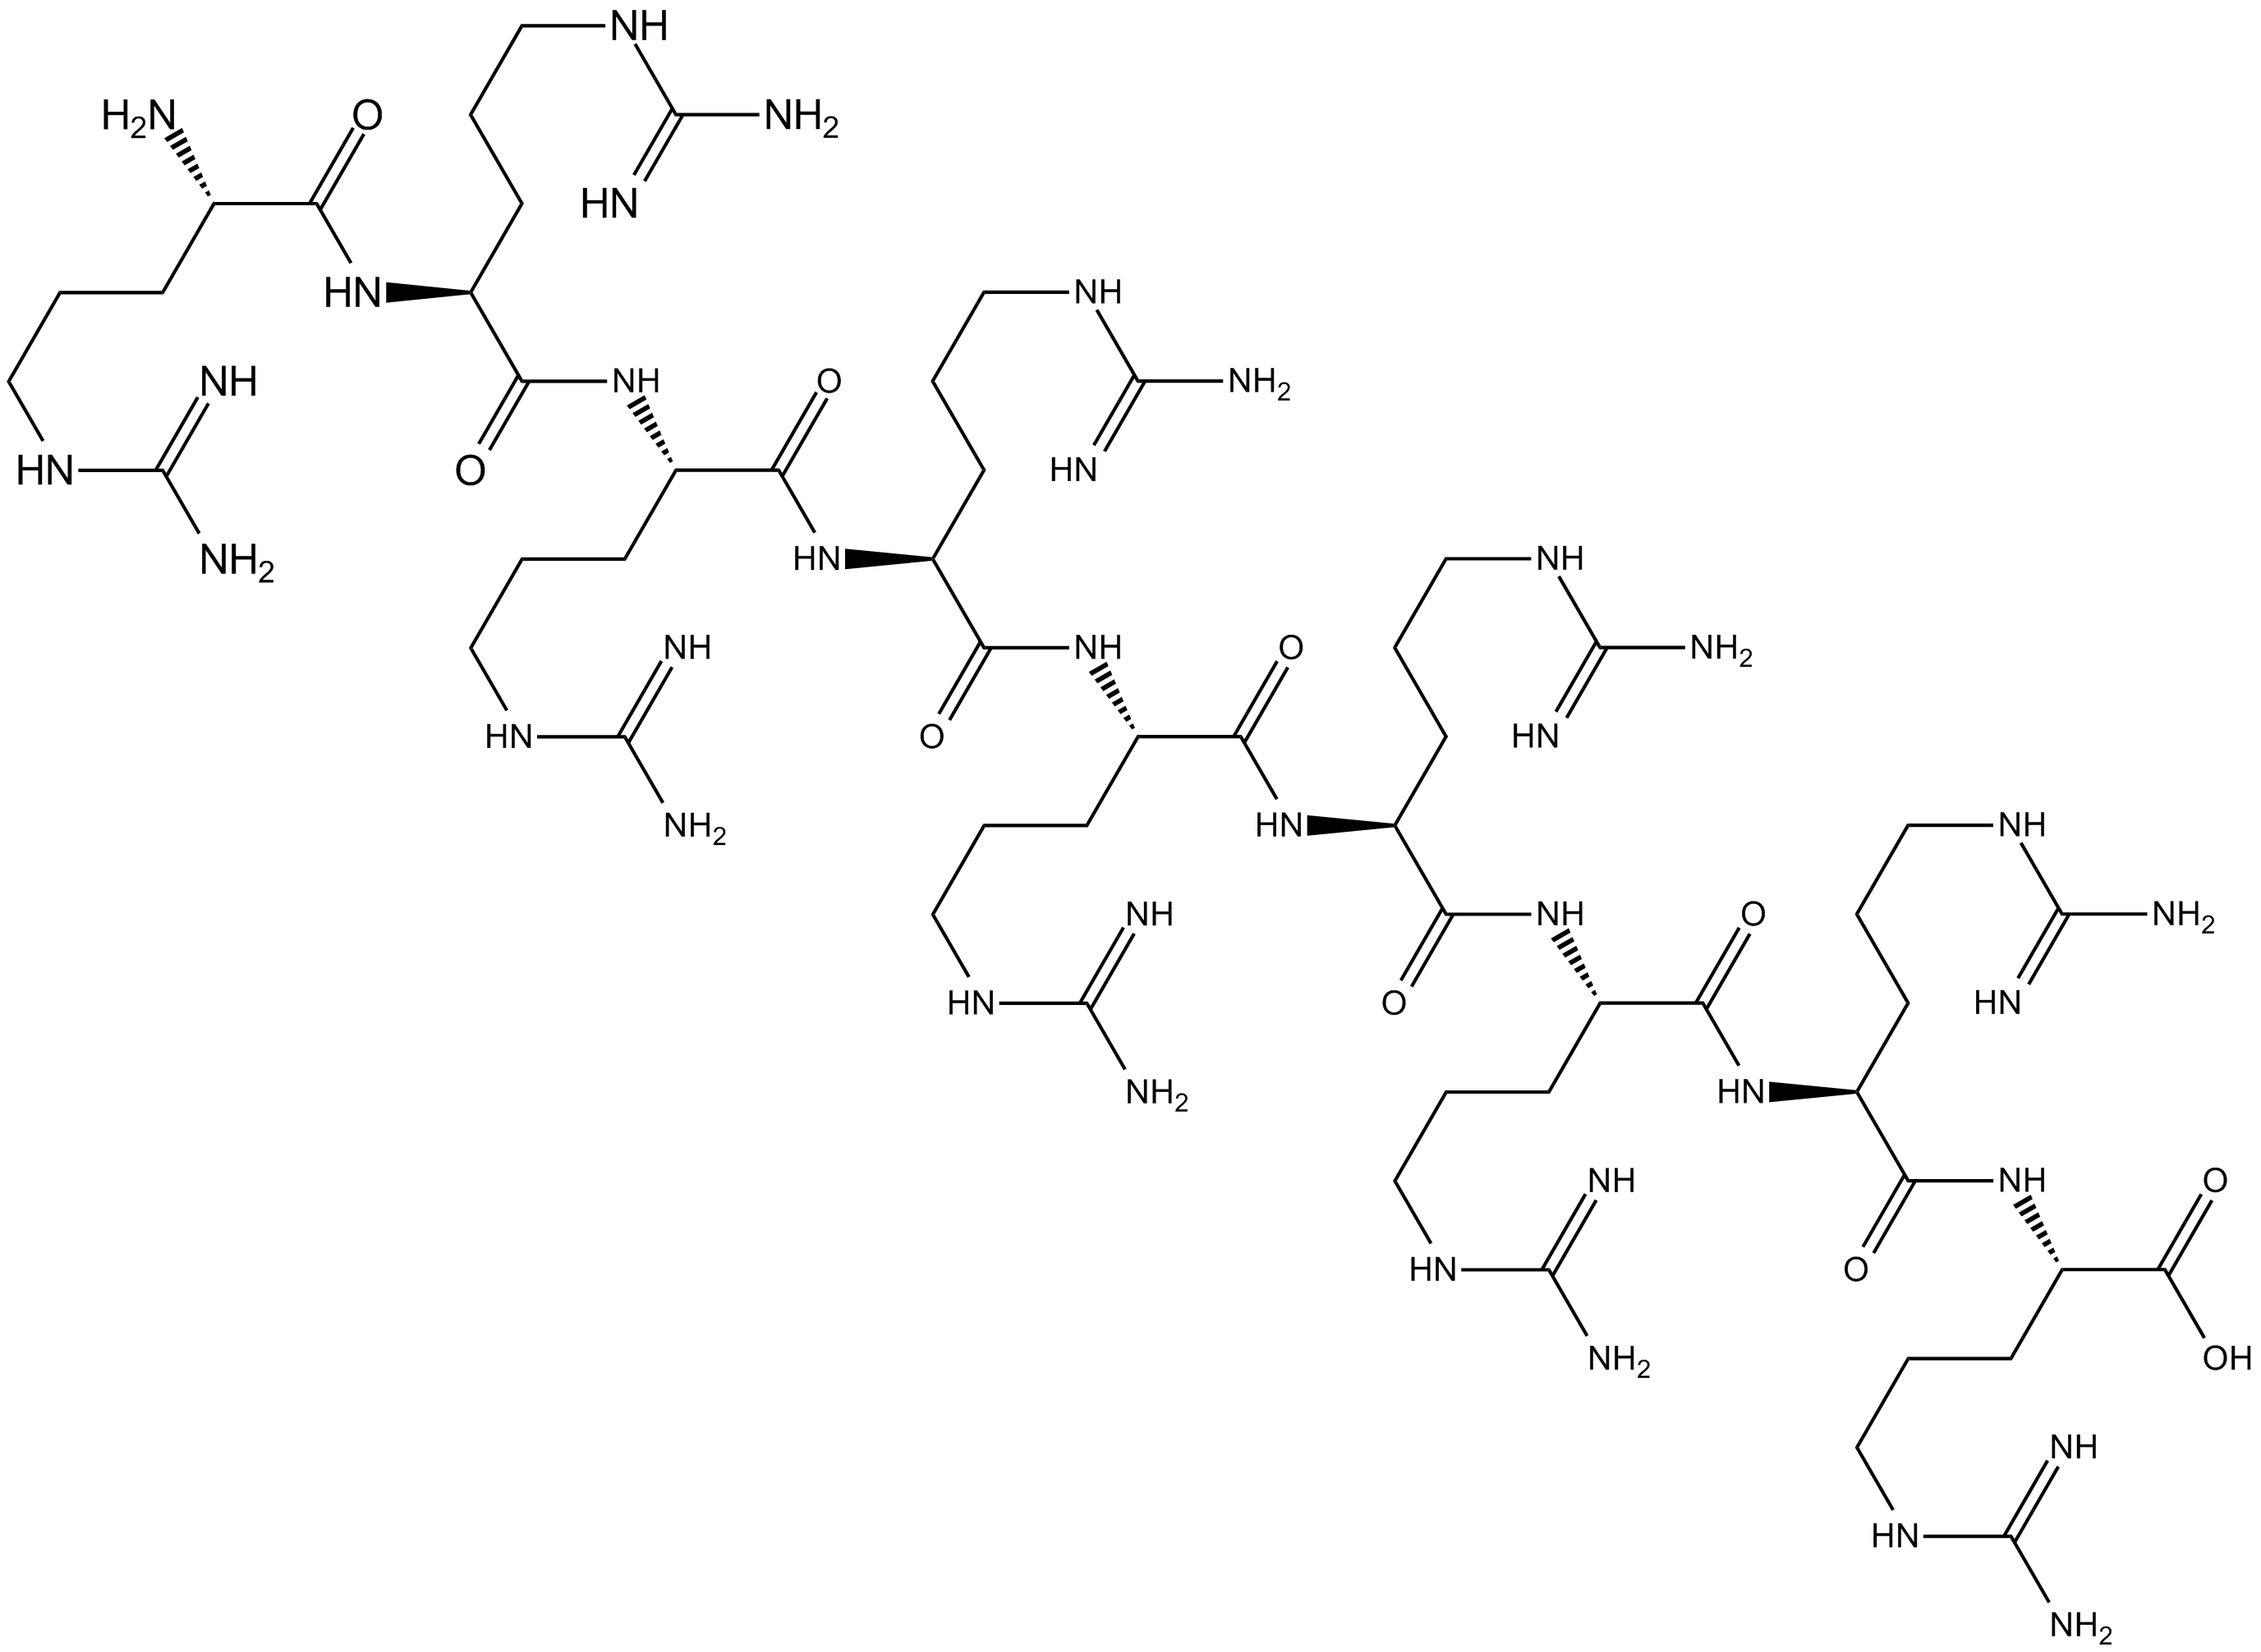 (Arg)9 peptide